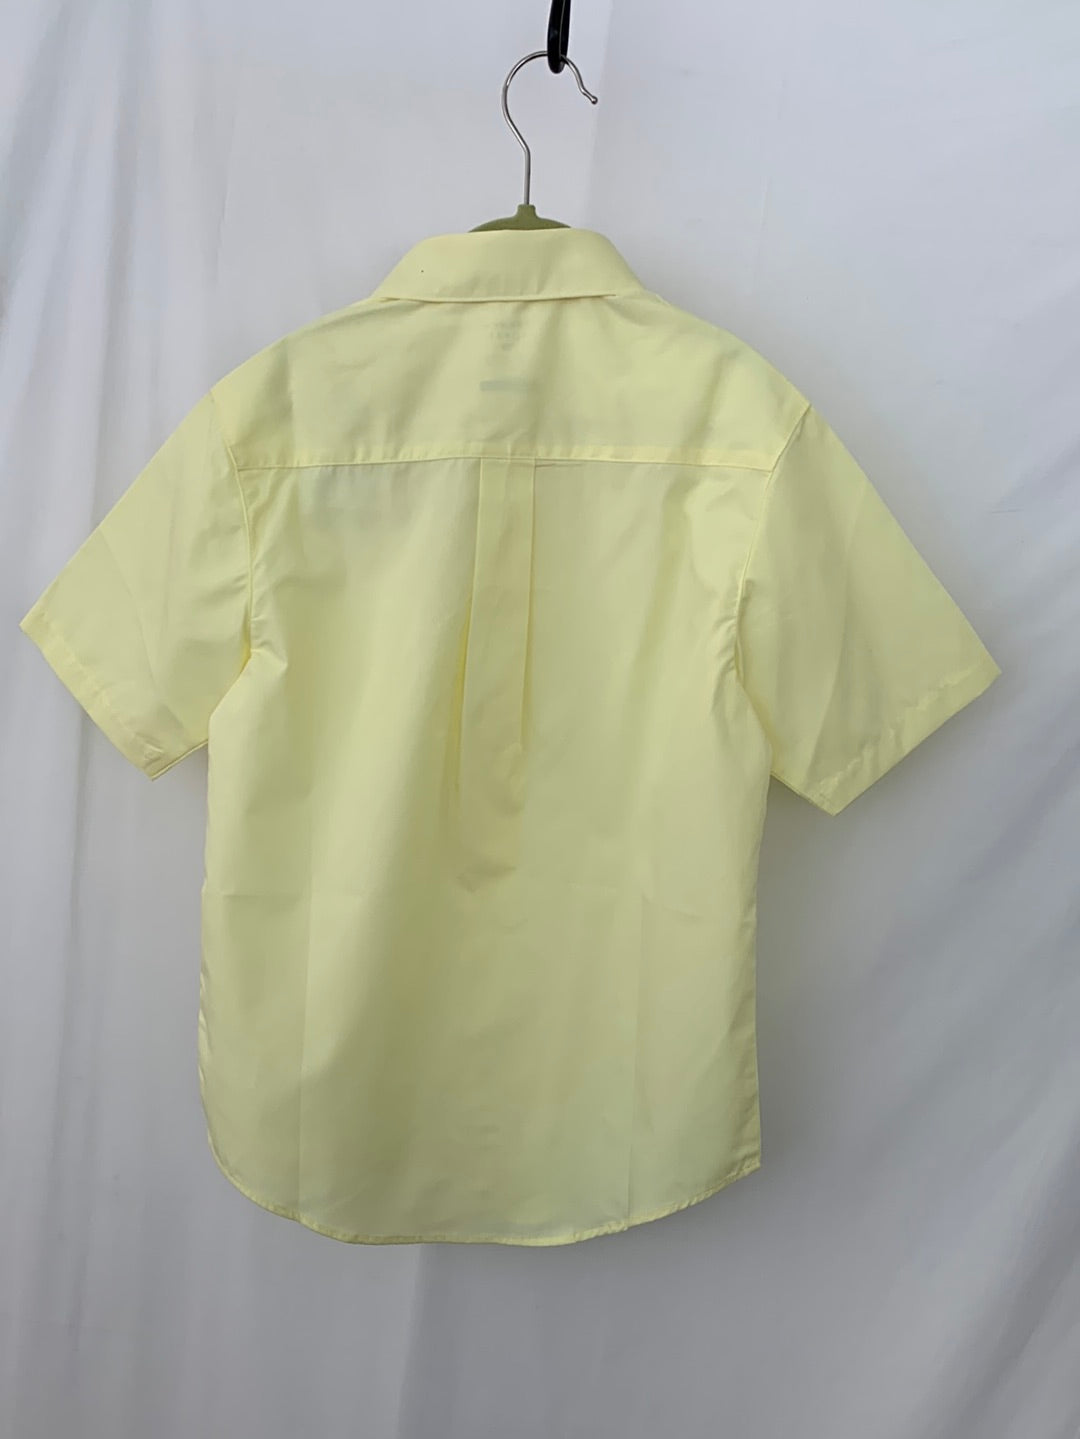 NWT - FRENCH TOAST light yellow Short-Sleeve Classic Dress Shirt - 10